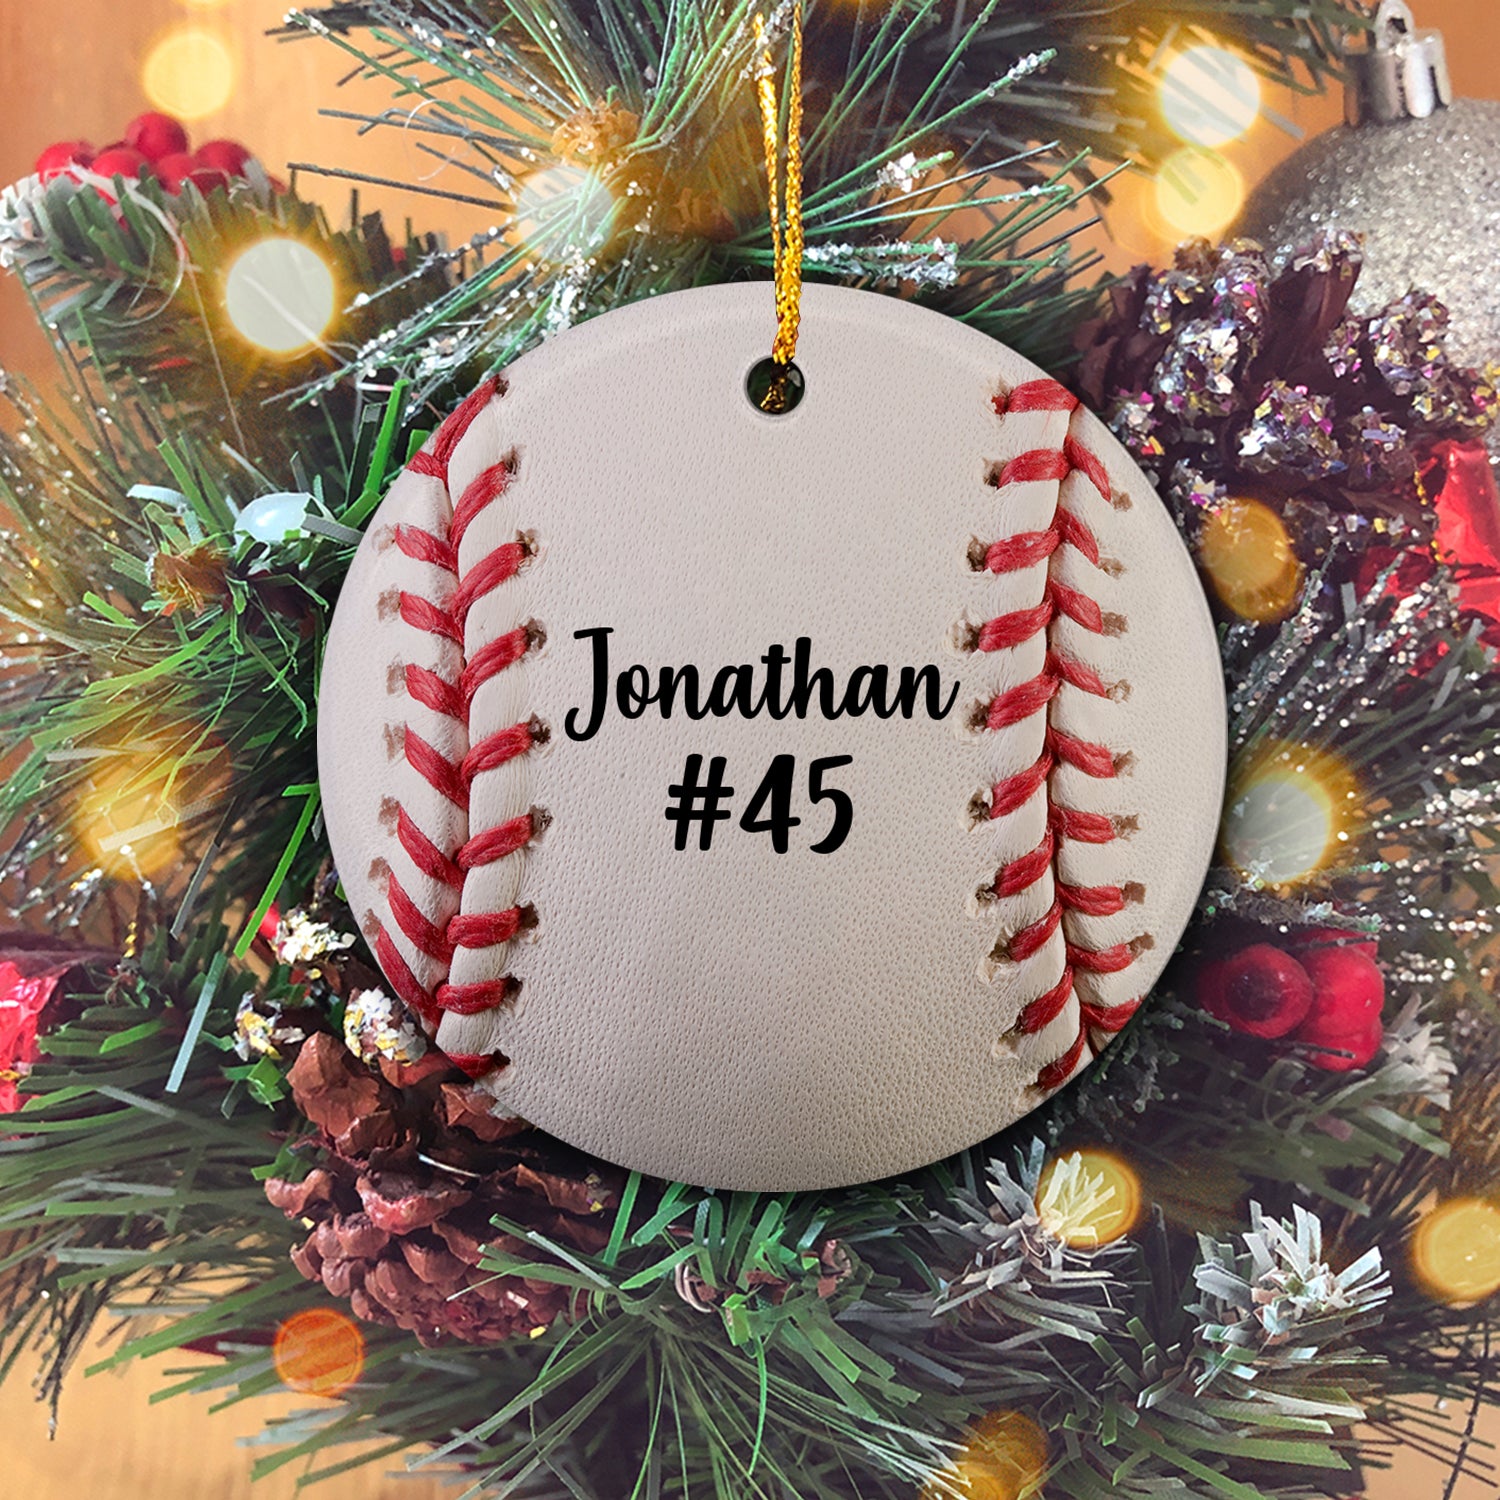 Persoanlized Name Ornament, Baseball Ornament, Sport Ornament, Softball Ornament, Baseball Gift, Sport Gift, Baseball Player Gift